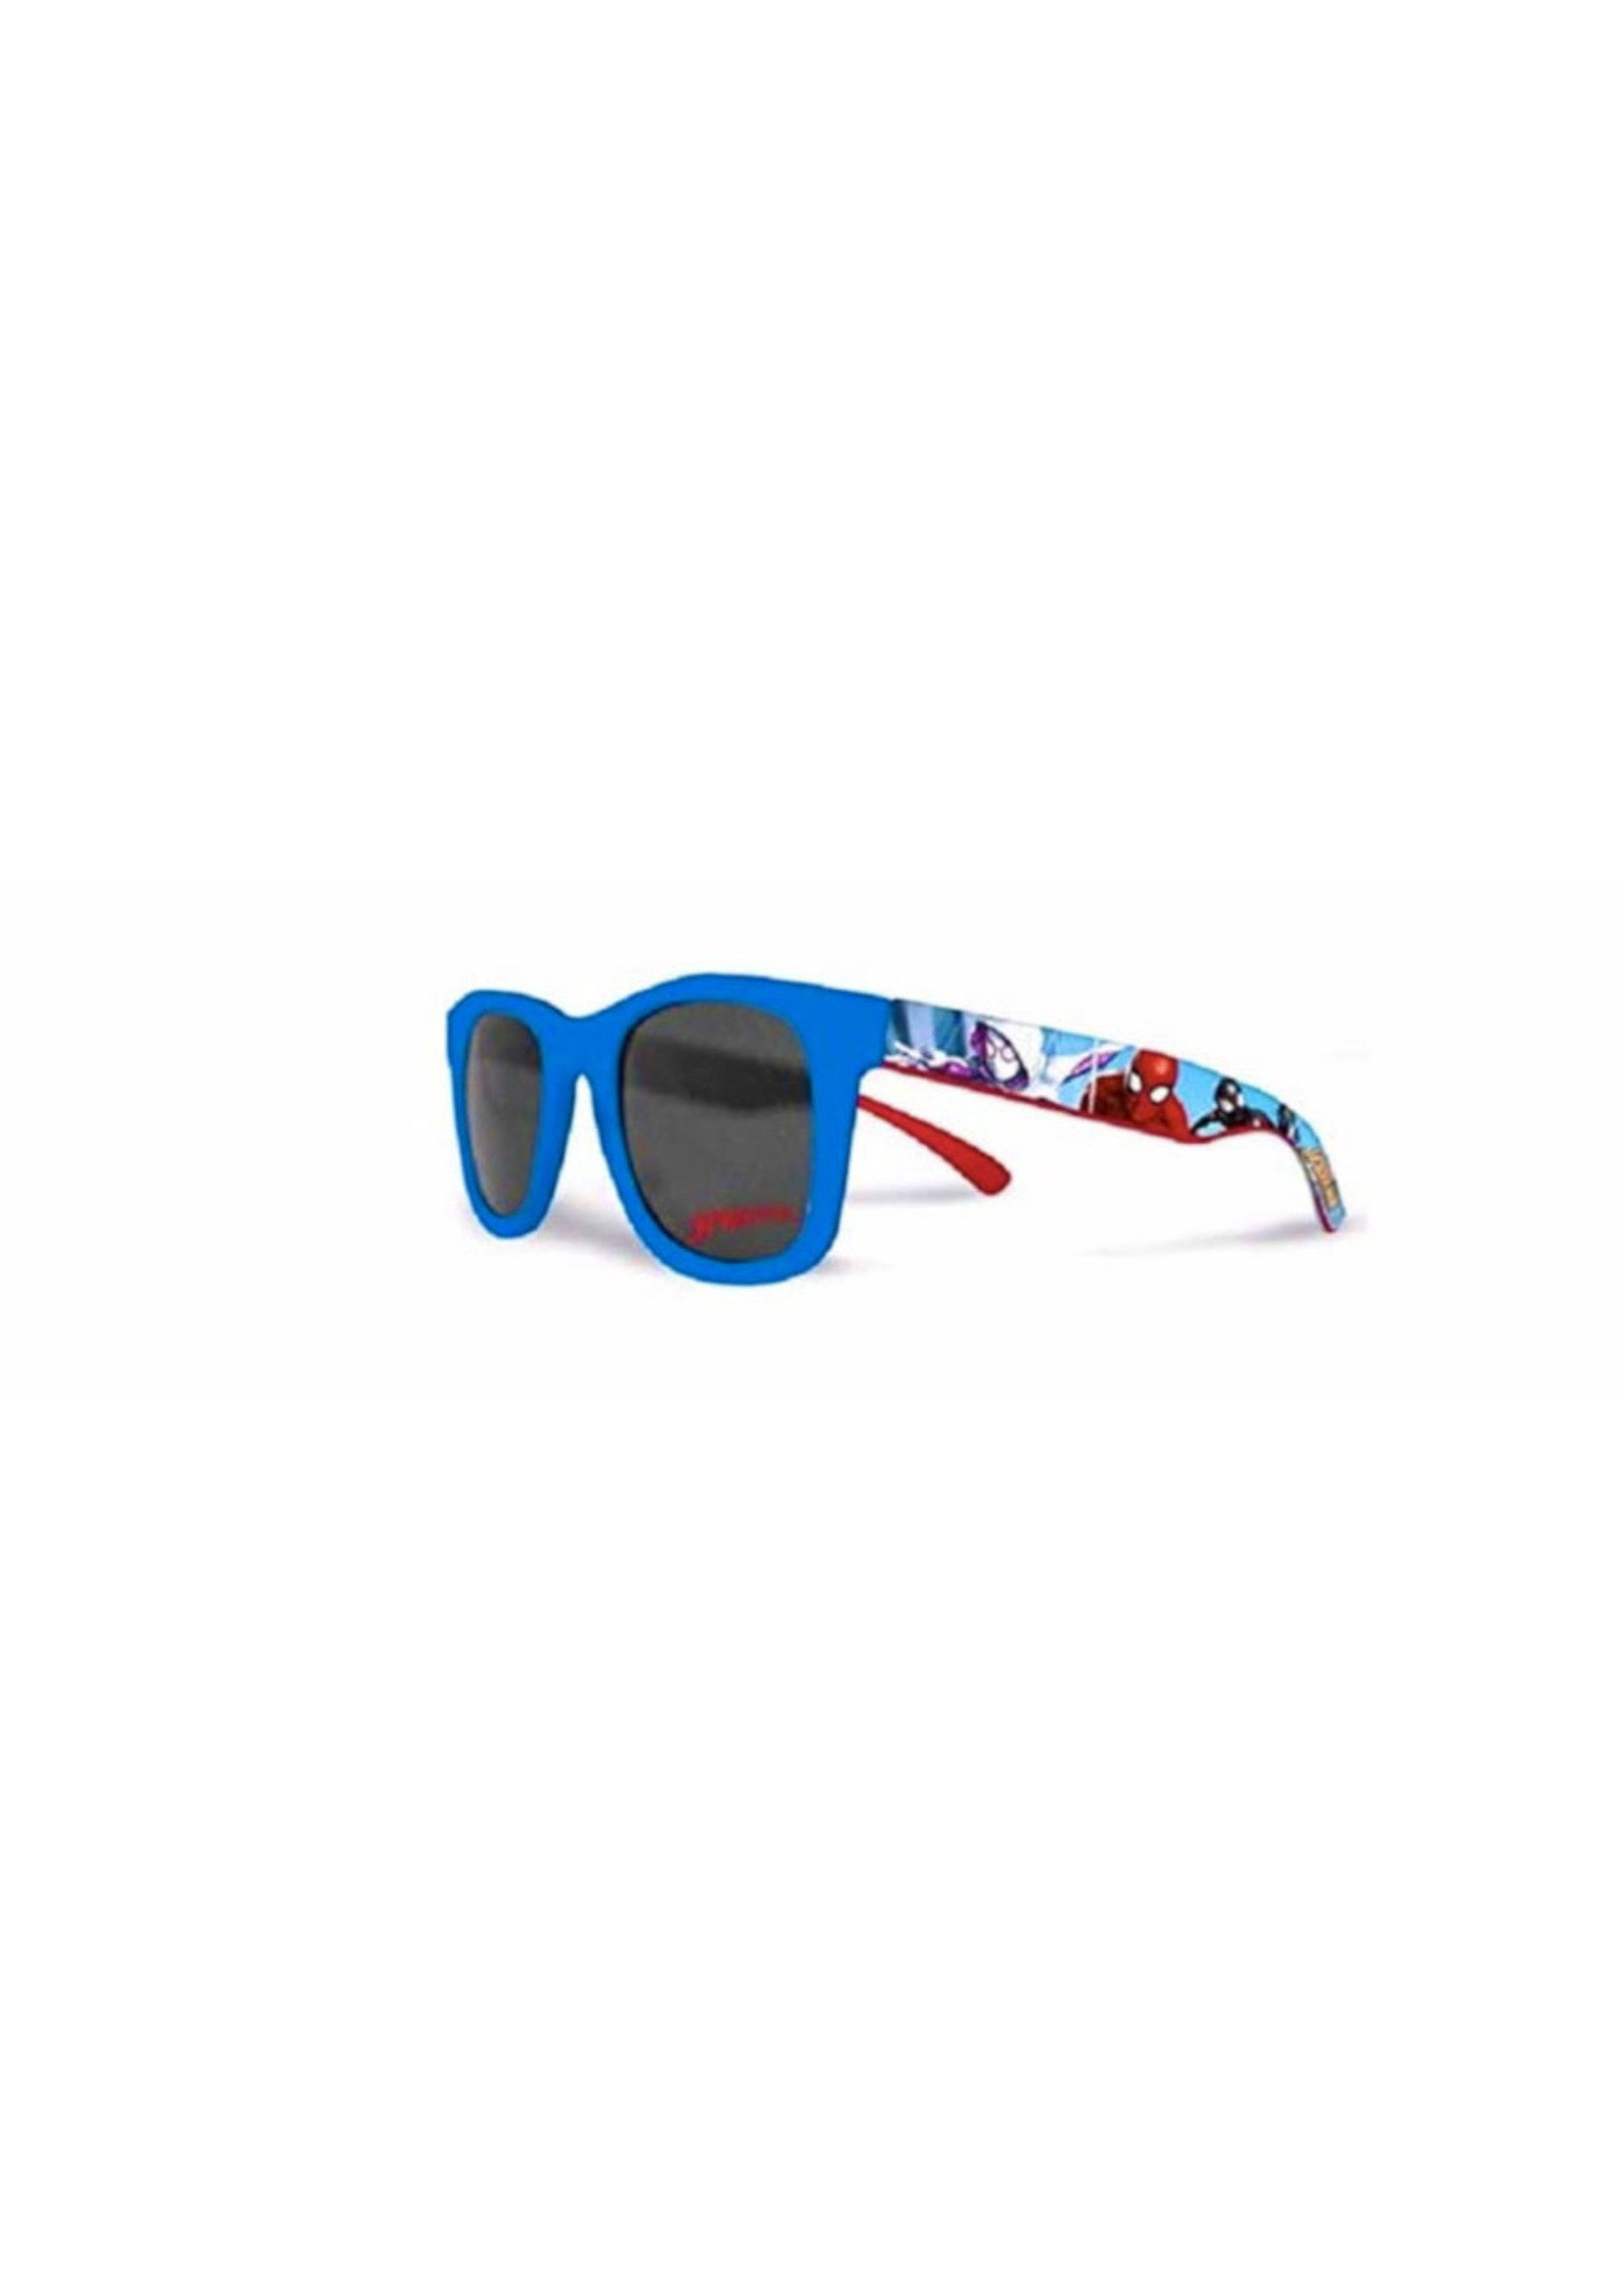 Marvel Spiderman sunglasses from Marvel blue